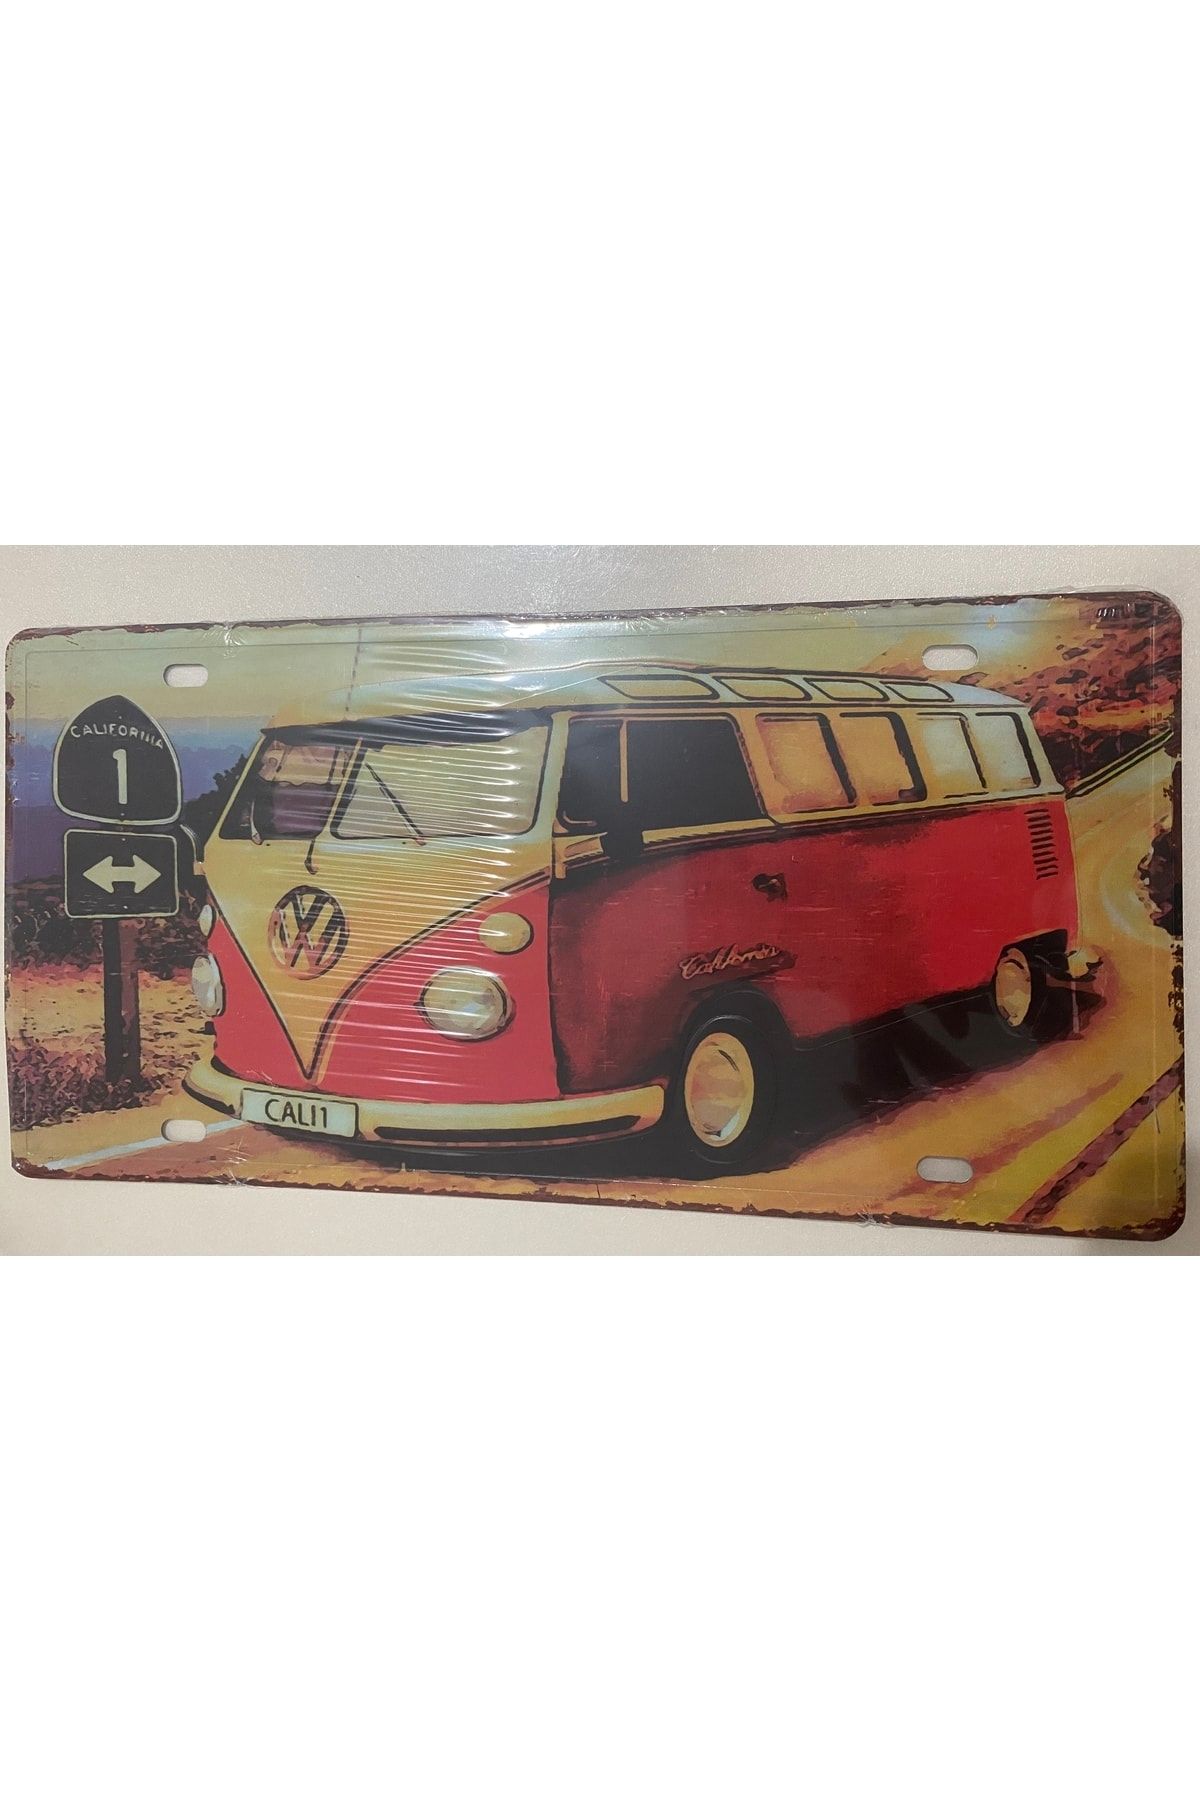 hukkabutik Dekoratif Resimli Plaka Duvar Dekorasyon Volkswagen Retro Karavan